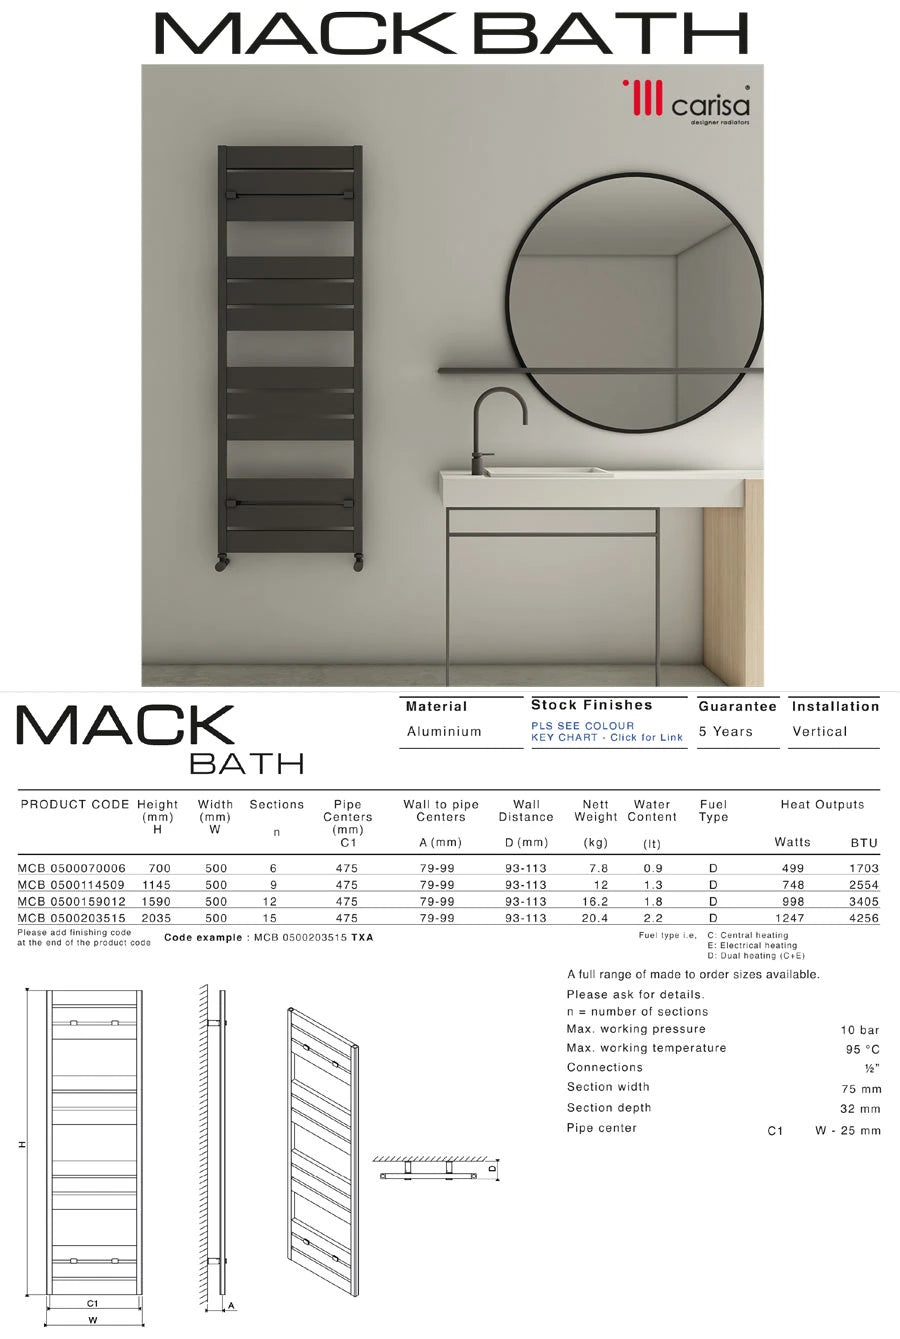 mack bath carisa specification technical drawing datasheet